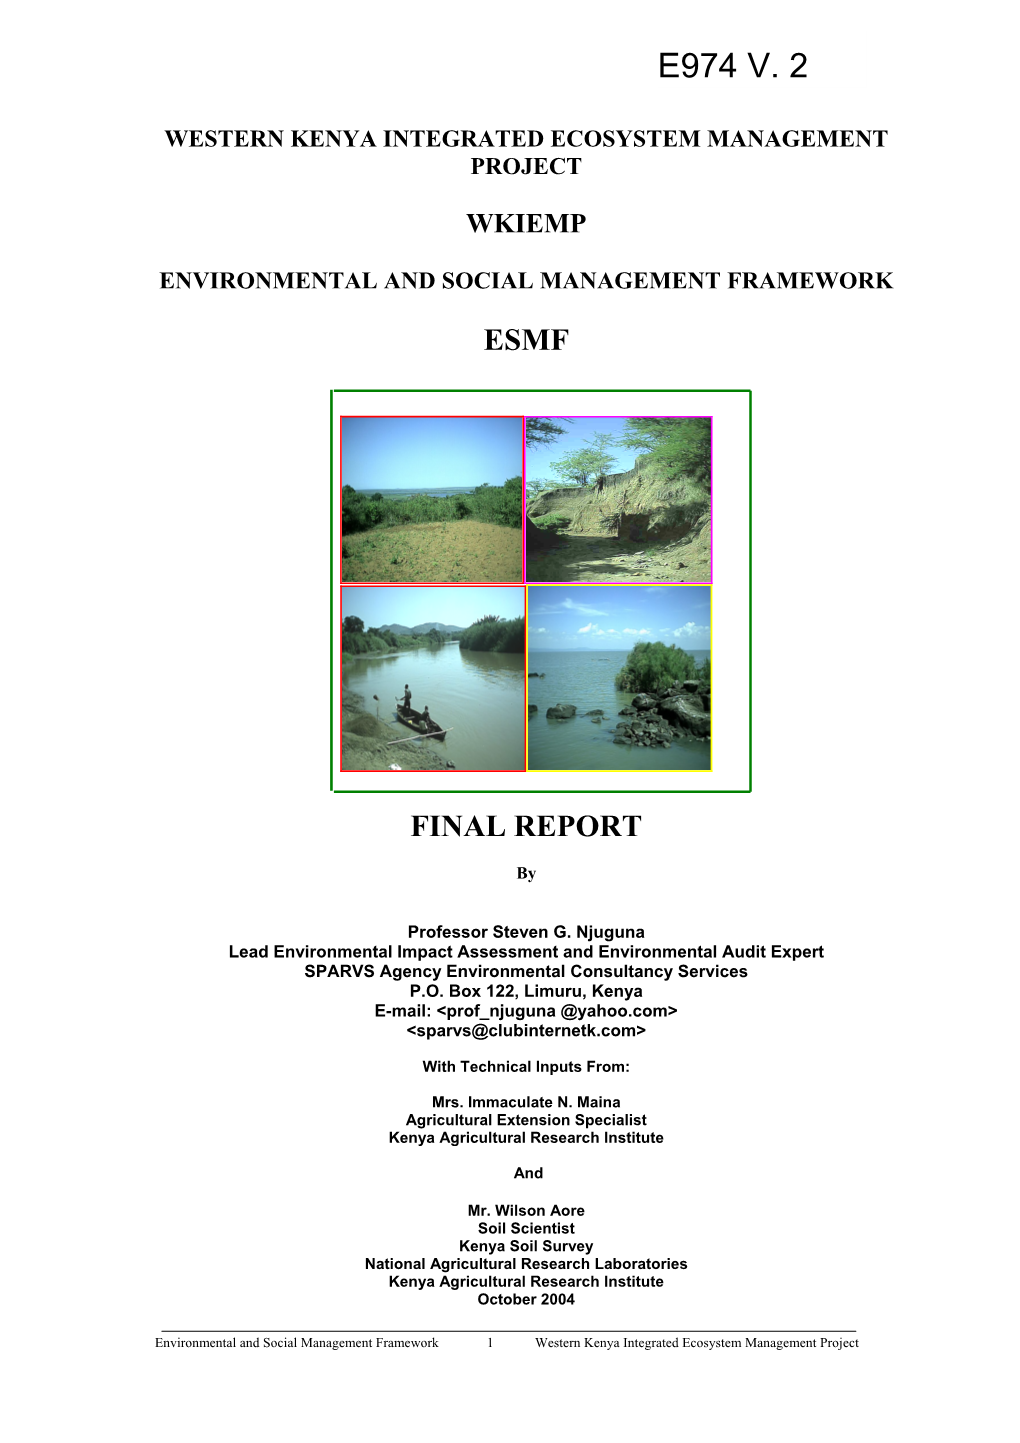 Western Kenya Integrated Ecosystem Management Project